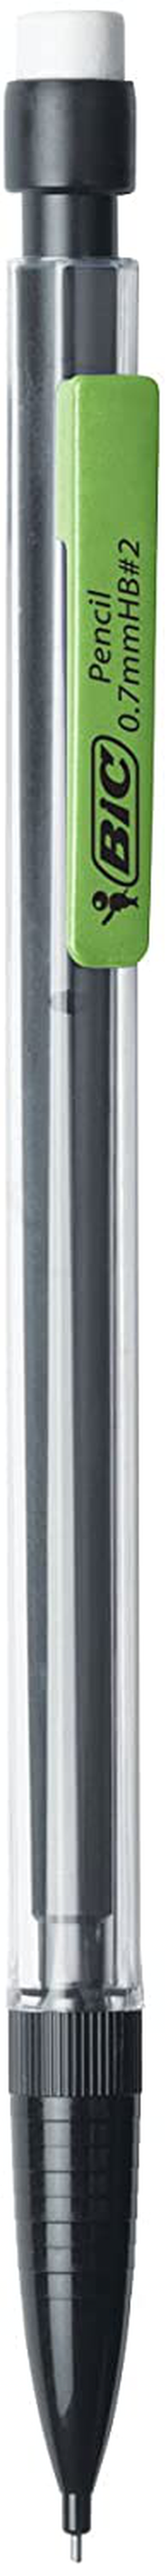 BIC Xtra-Smooth Mechanical Pencil, Medium Point (0.7 mm), 40-Count , Black